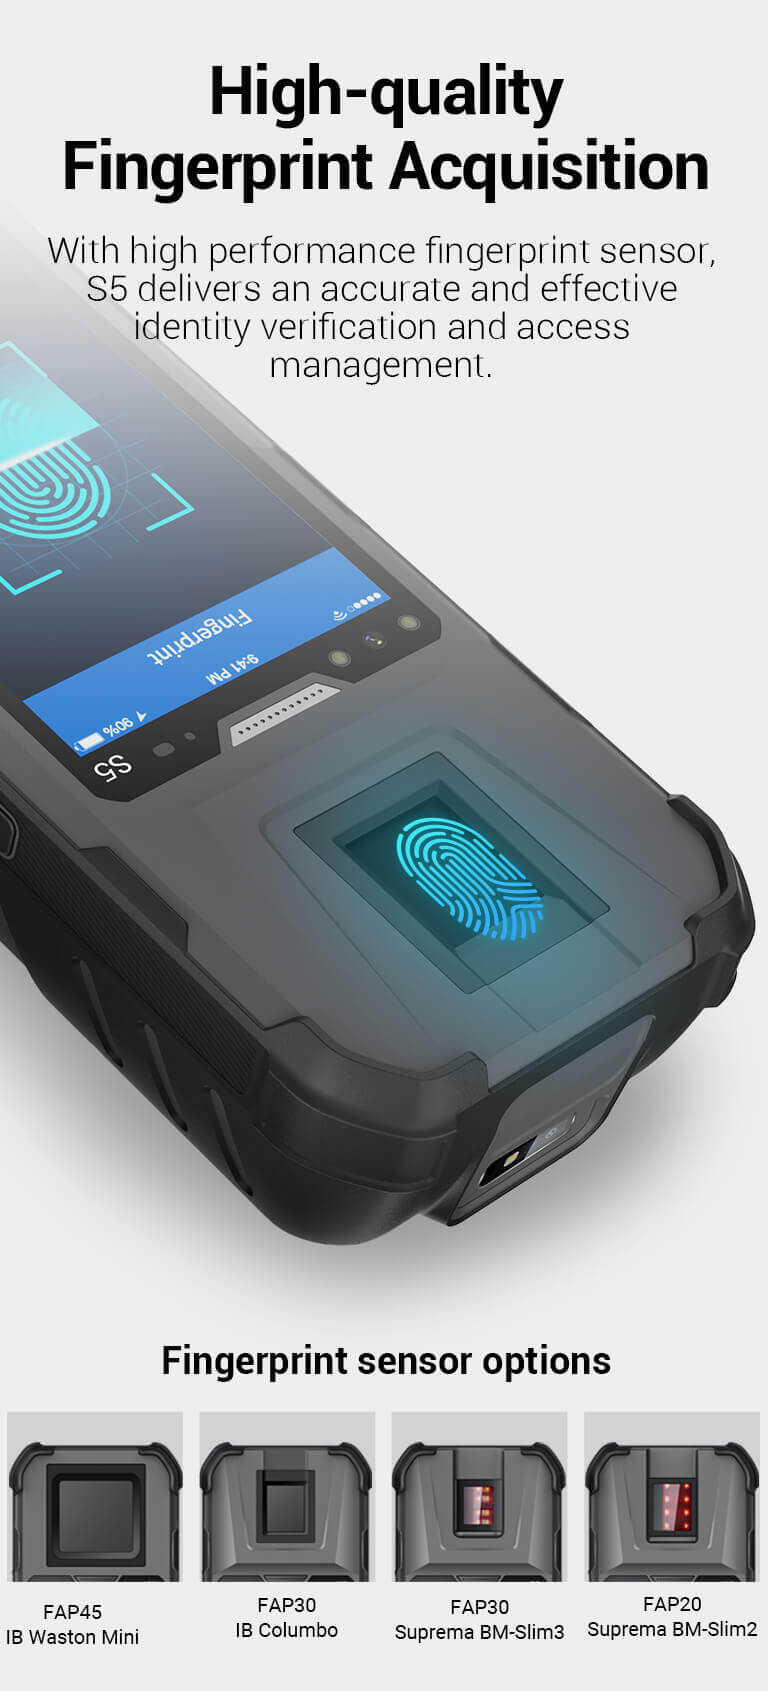 FBI PIV* and FBI Mobile ID certified FAP 20 fingerprint scanner rugged 